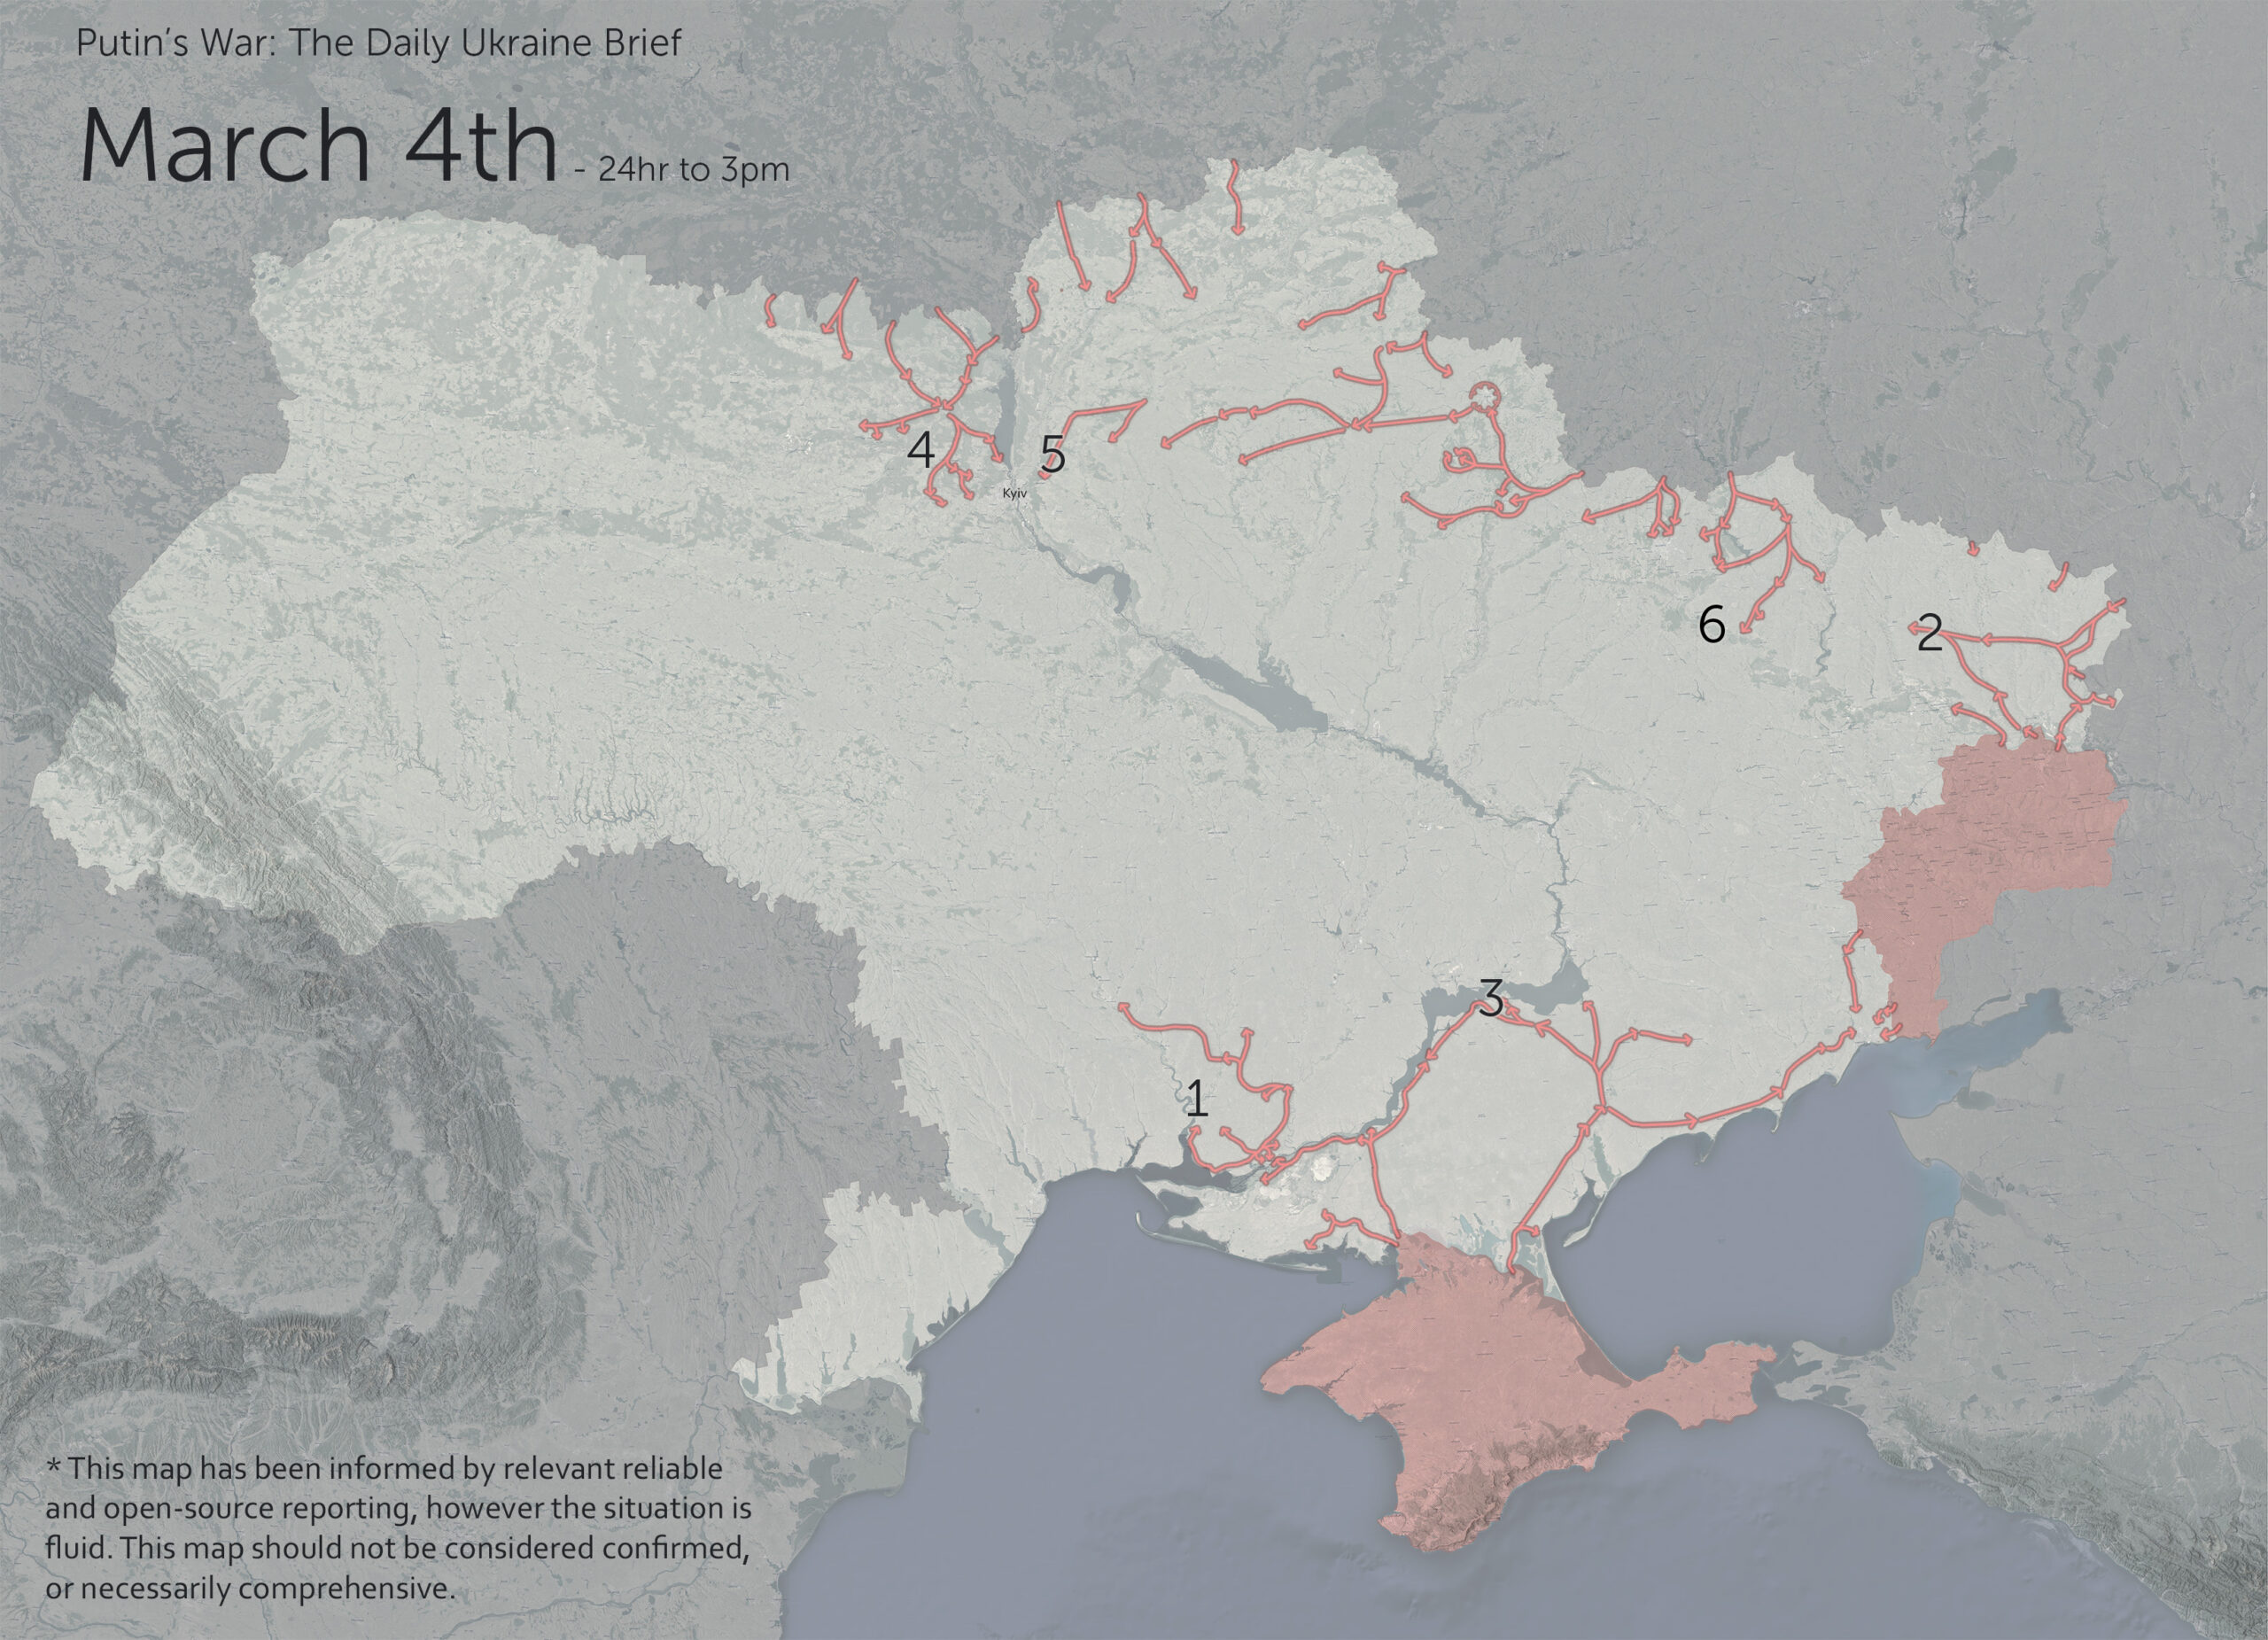 March 4th war map in Ukraine by Nathan Ruser